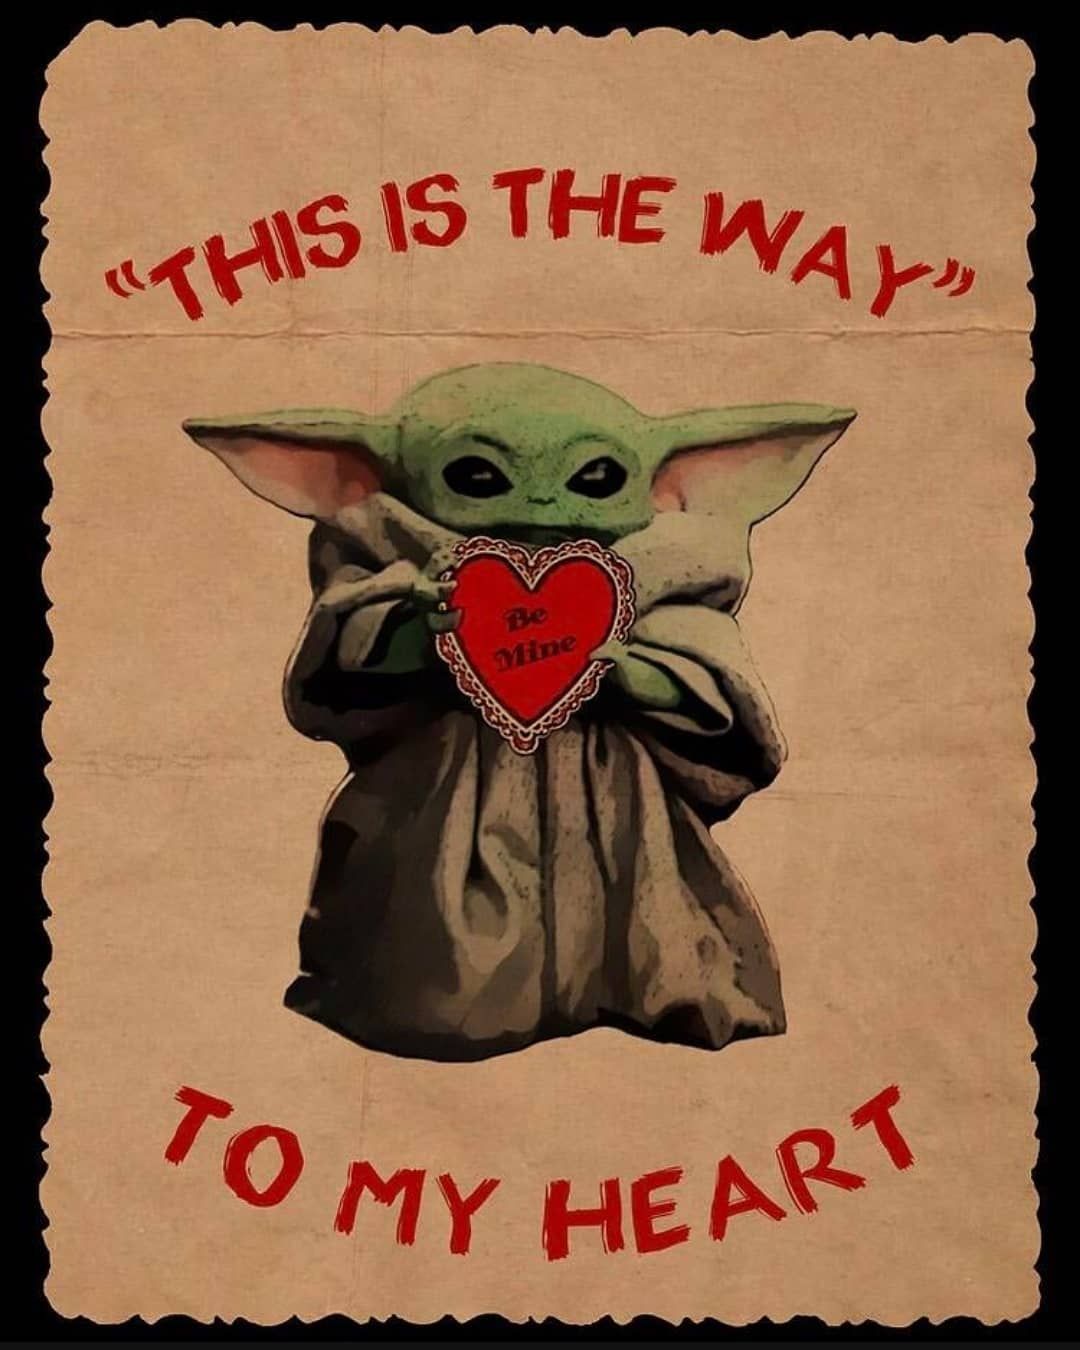 Baby Yoda on Instagram: “Wuv you wif all my heart